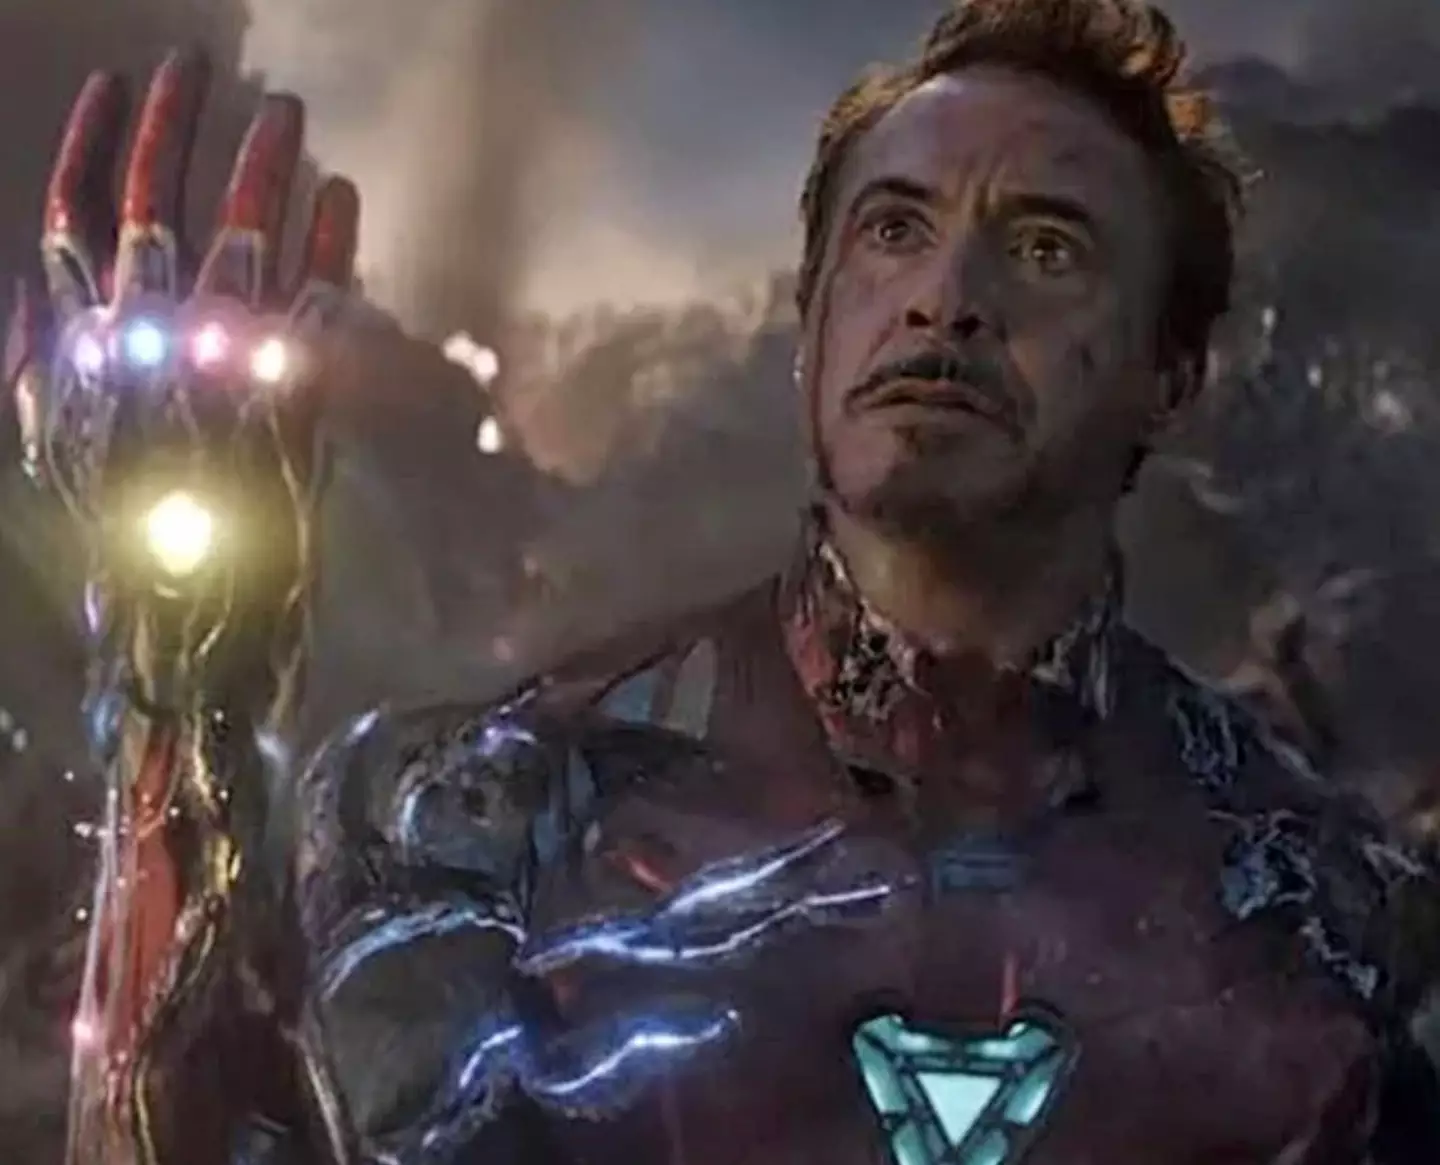 Robert Downey Jr. starred as Iron Man in the MCU. (Marvel/Disney)